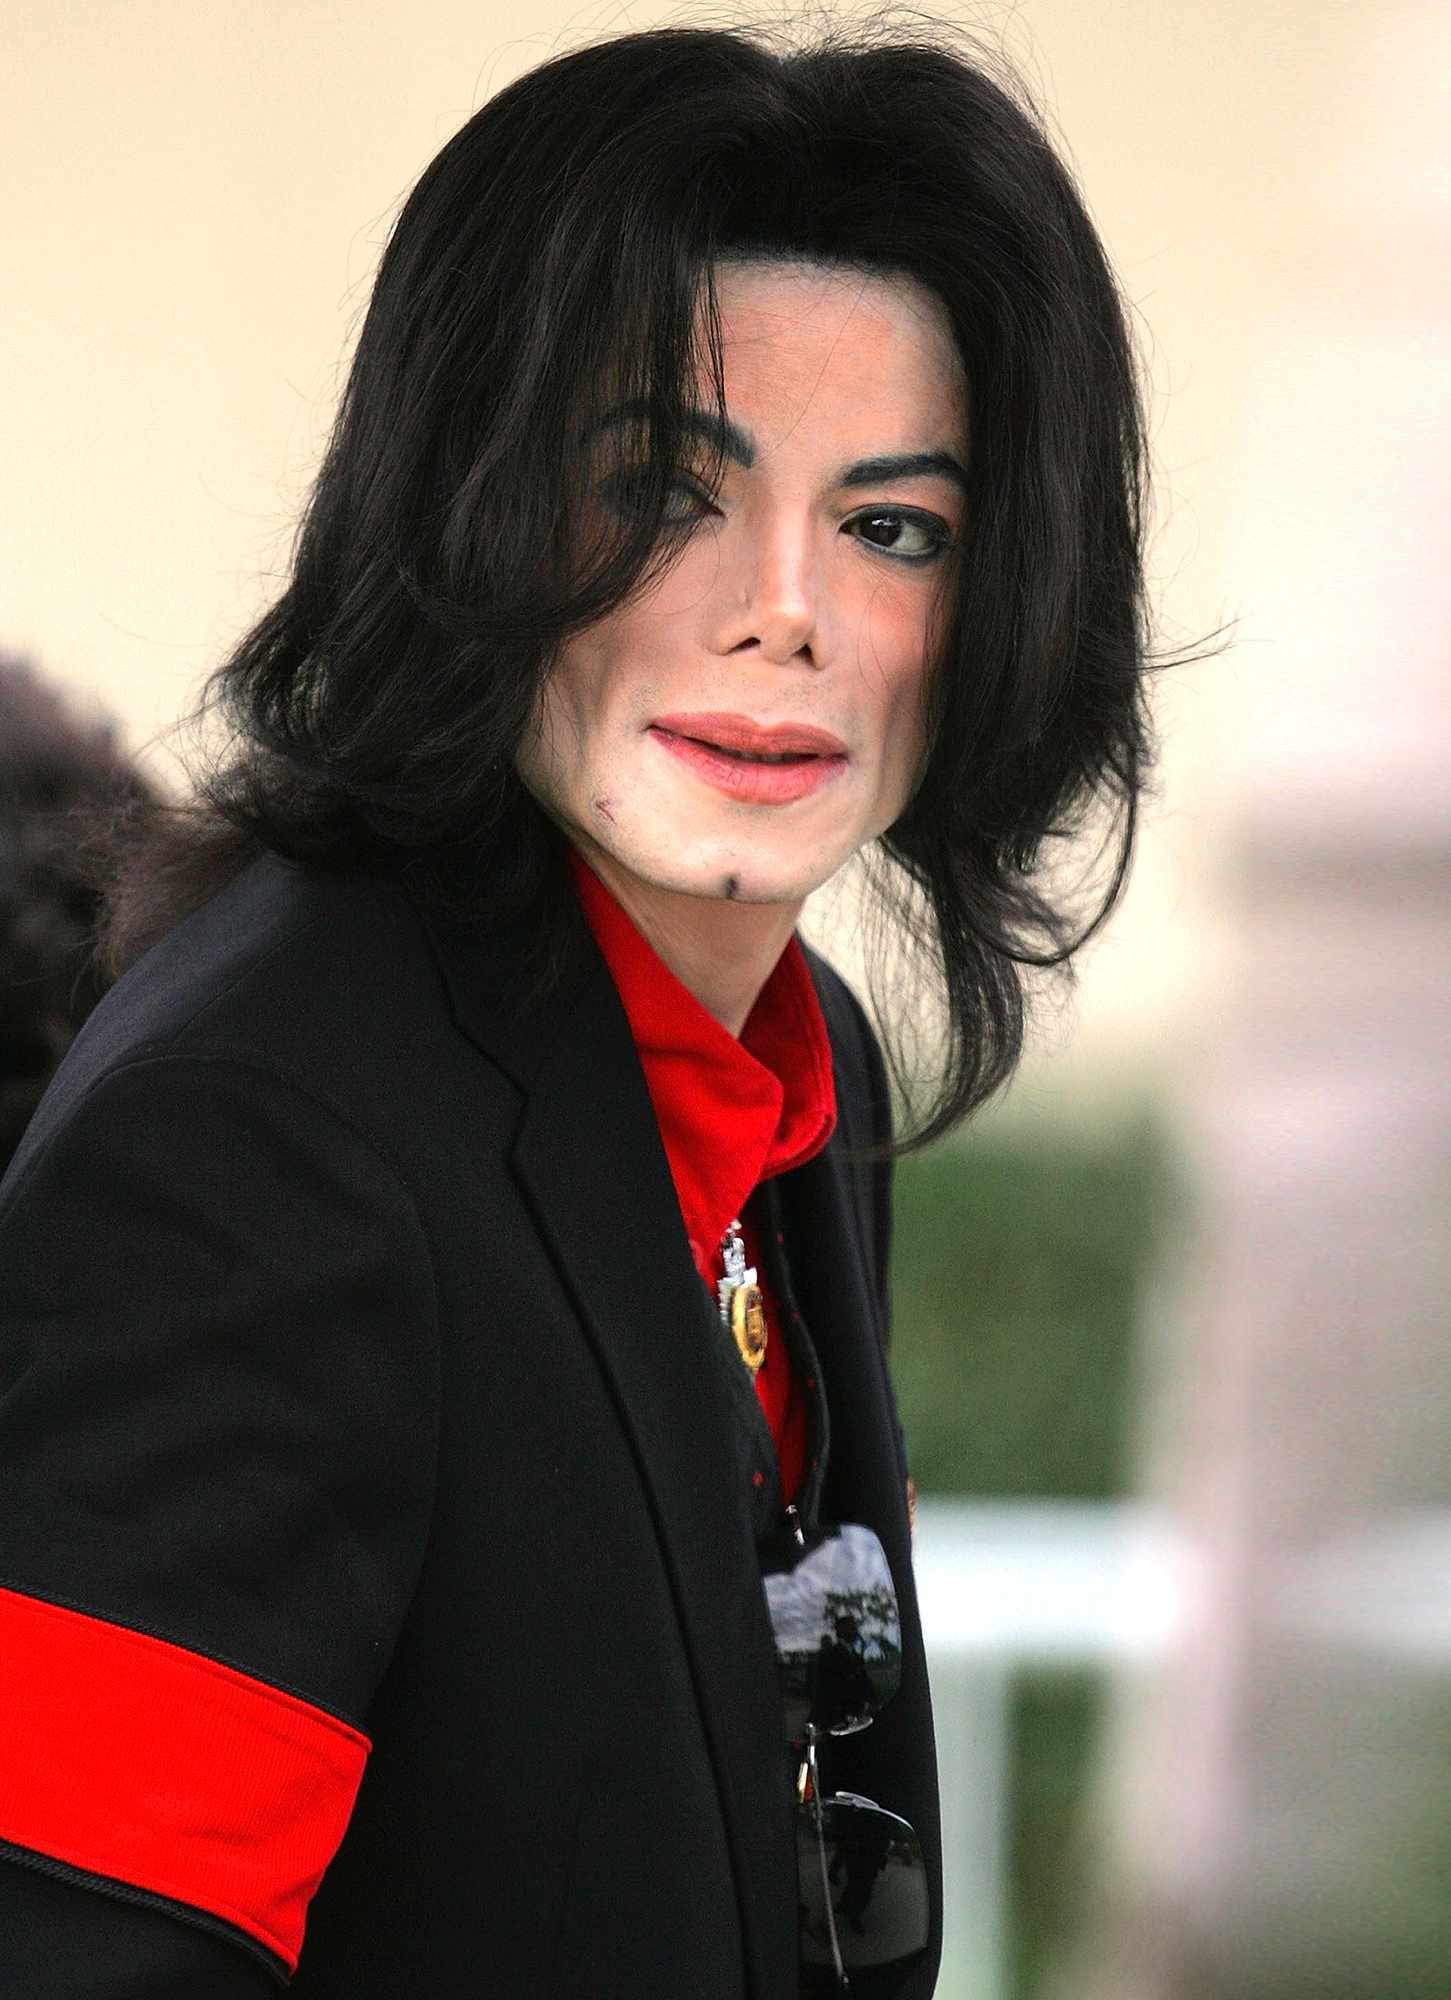 Michael Jackson 210Aa5866C7D4Dd58De8E3Af57Fe919A